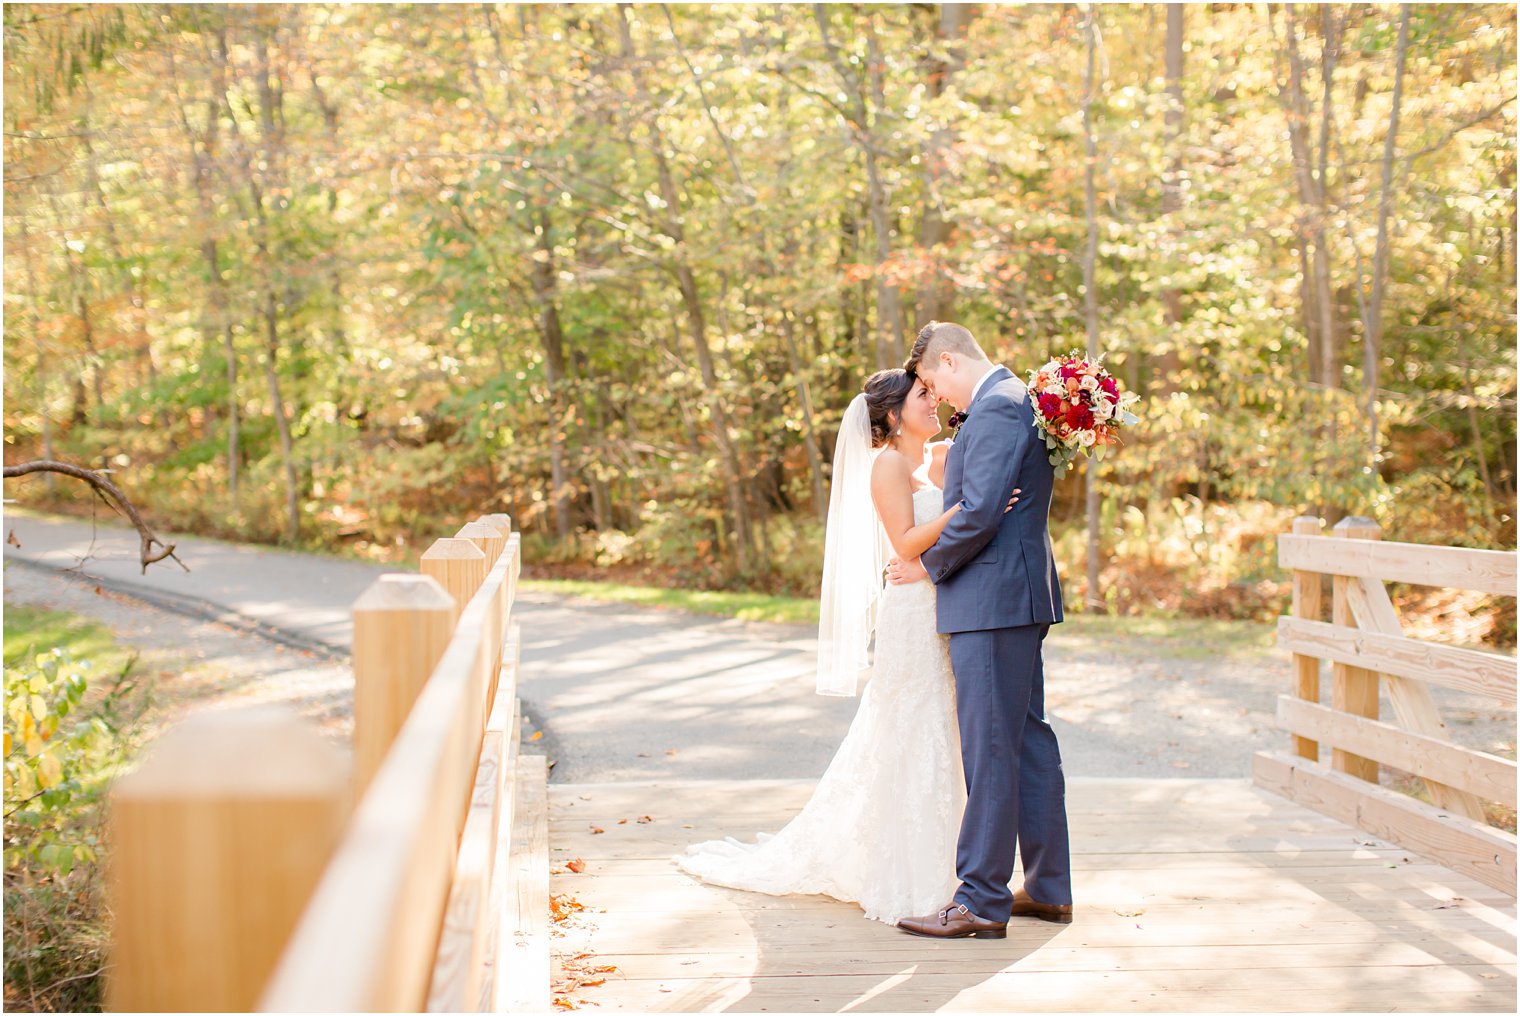 Romantic photo of bride and groom | Photos by NJ Wedding Photographers Idalia Photography